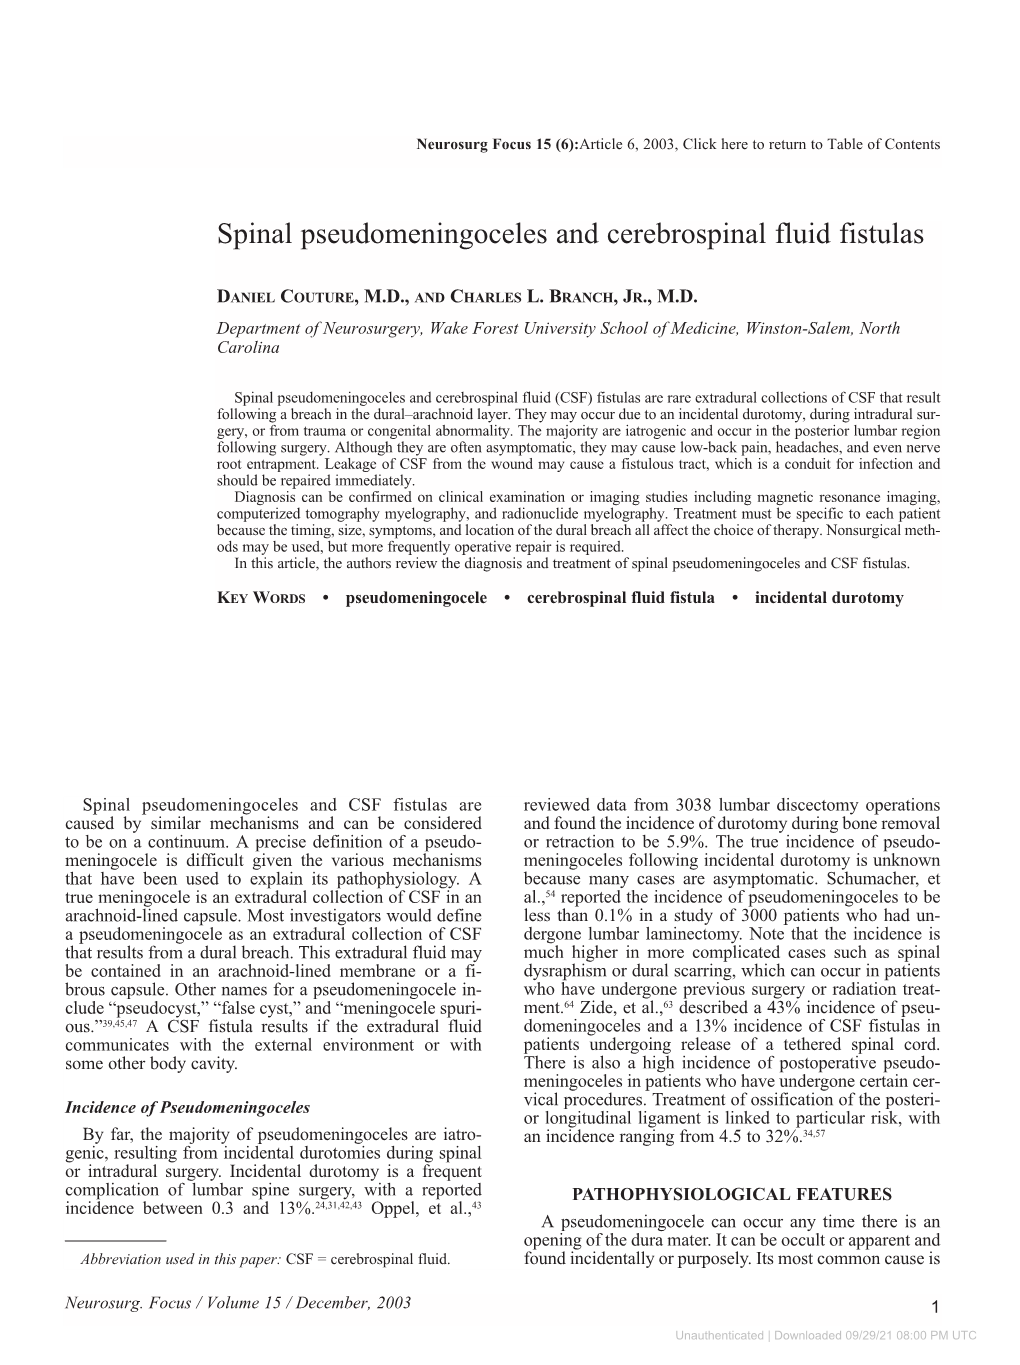 Spinal Pseudomeningoceles and Cerebrospinal Fluid Fistulas